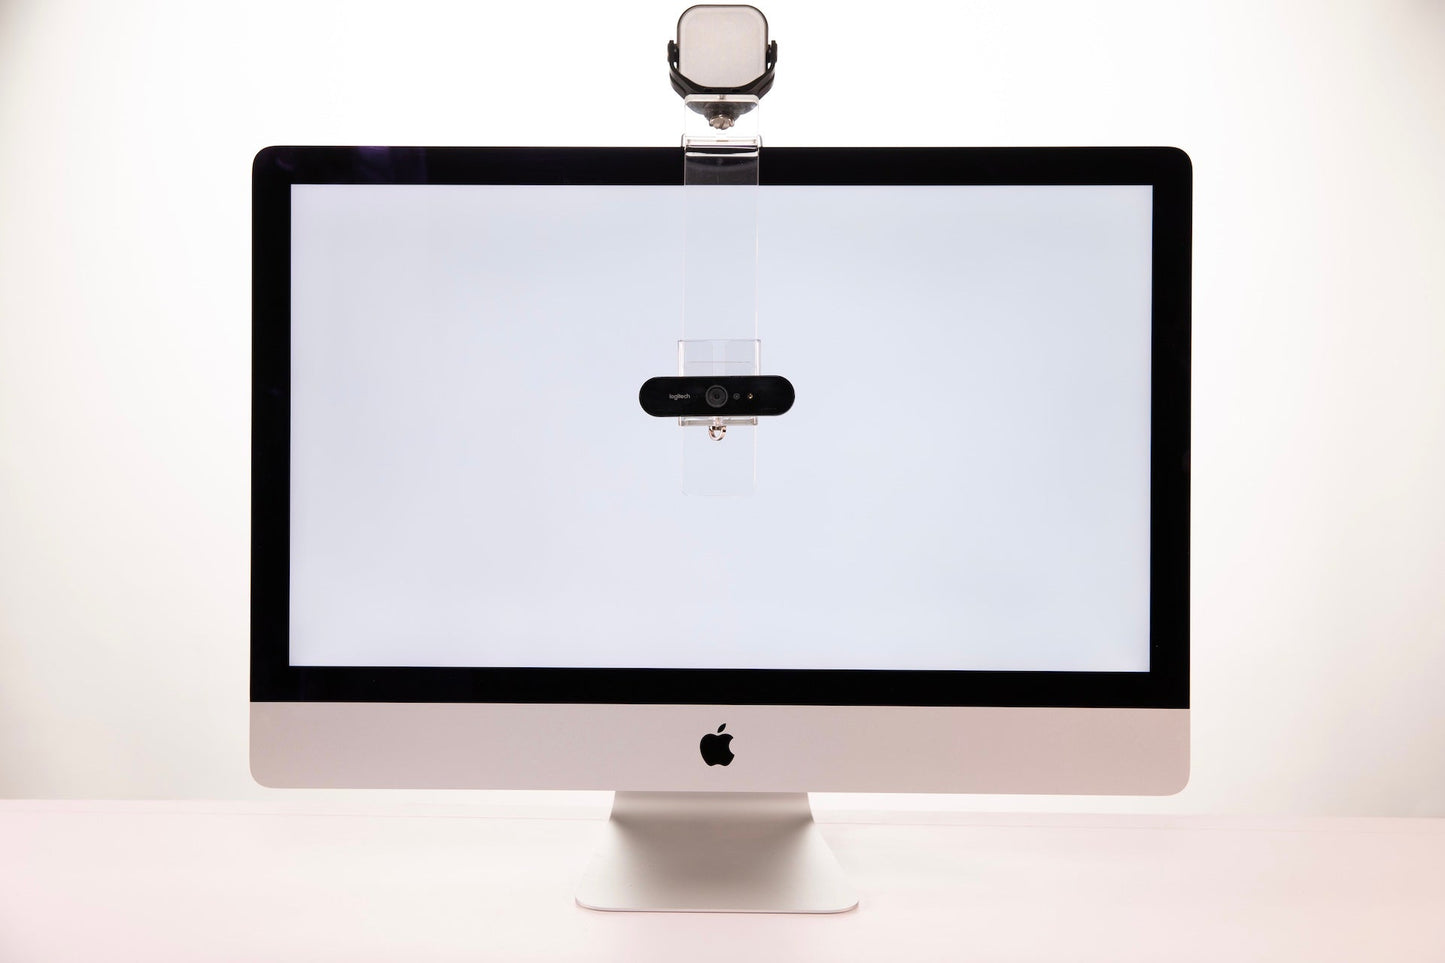 PlexiCam Road Warrior Pro with Logitech Brio on 27 inch Apple iMac